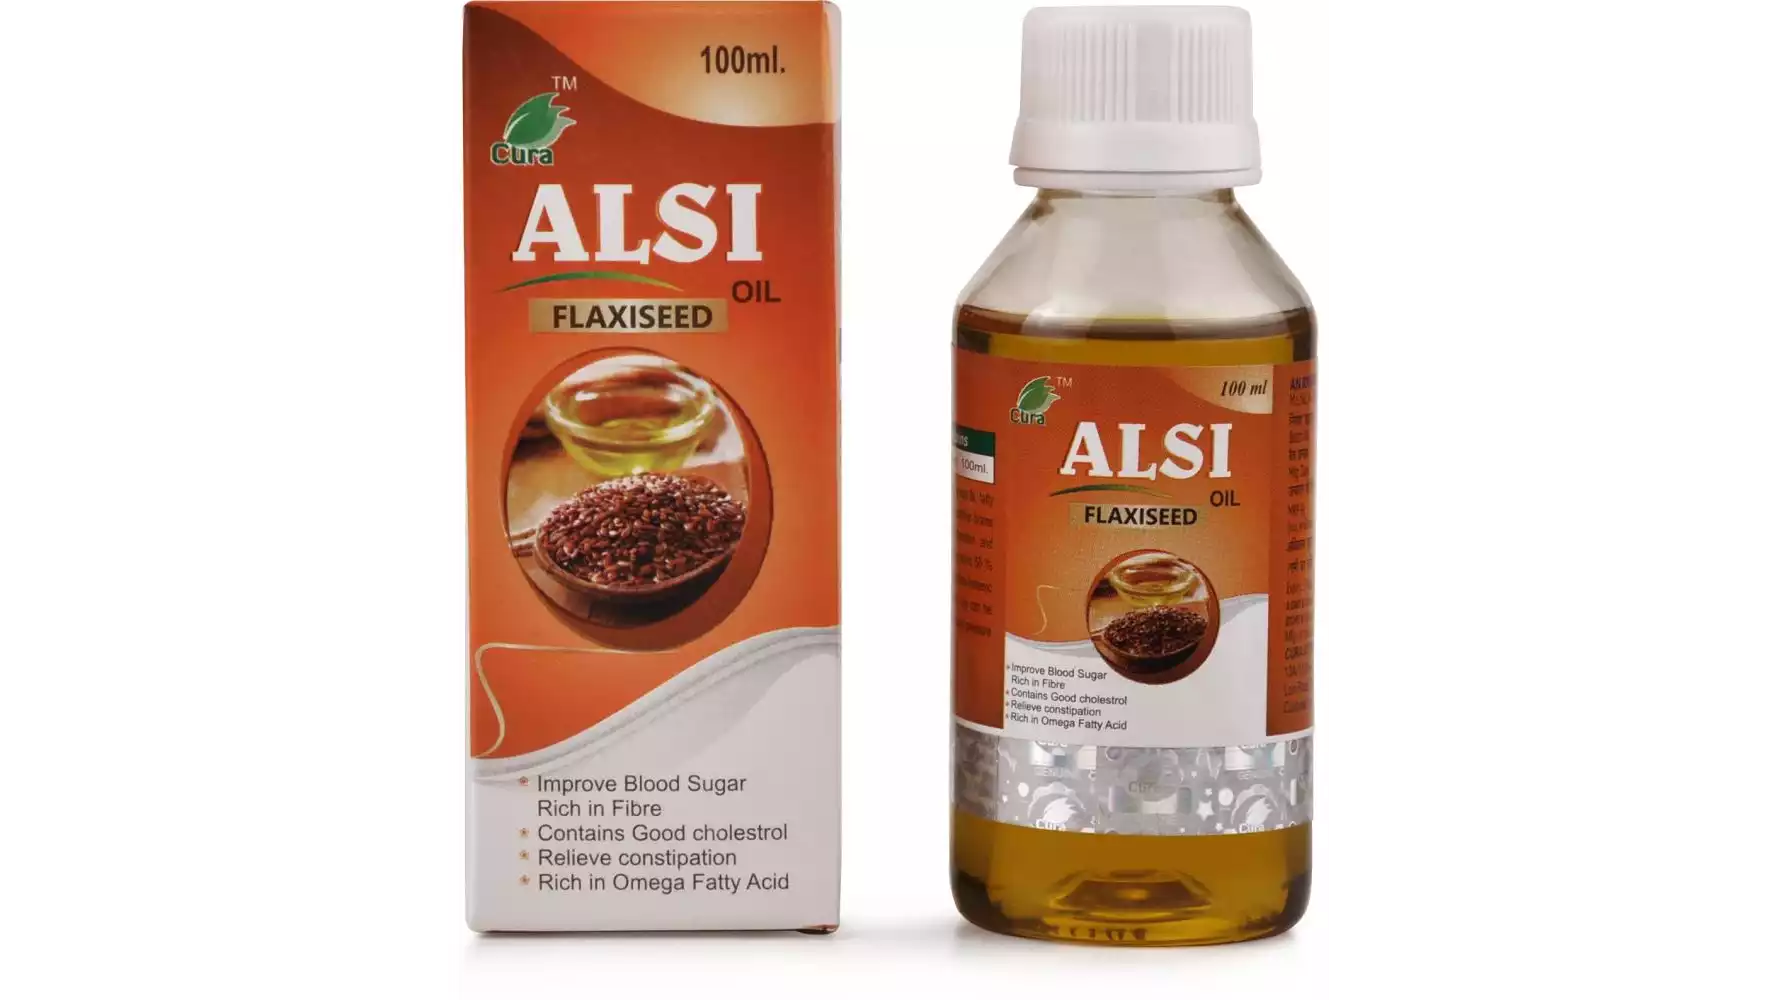 Cura Alsi Oil (100ml)